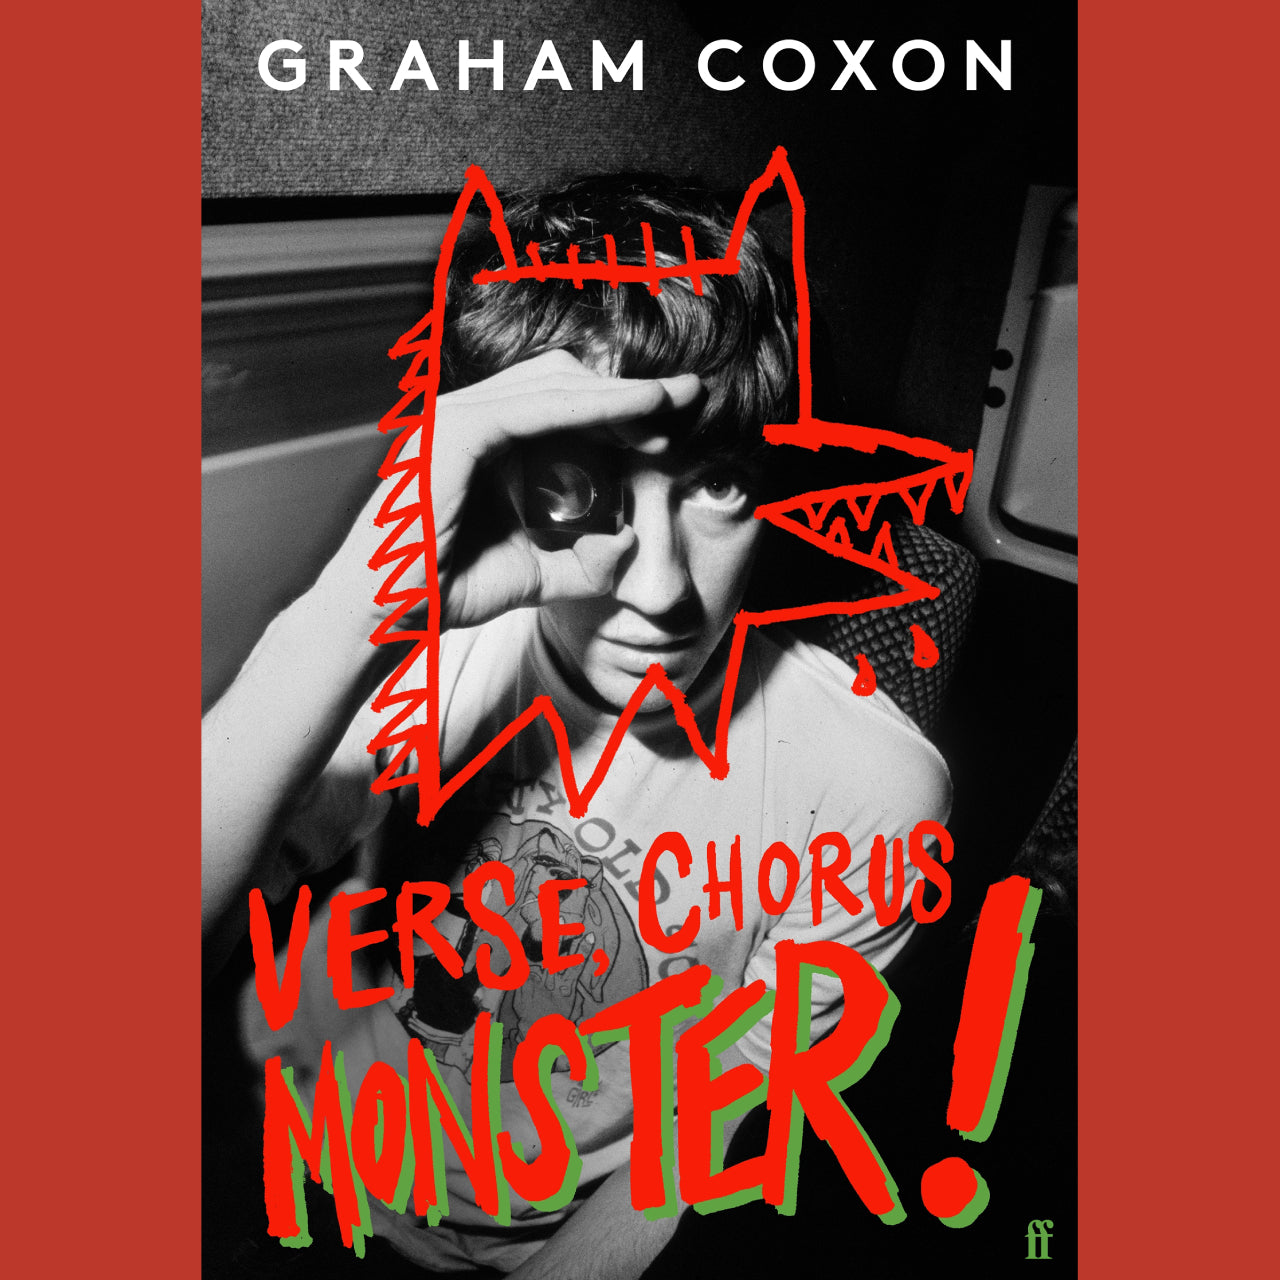 Graham Coxon - Verse, Chorus, Monster! | Buy the book from Flying Nun Records